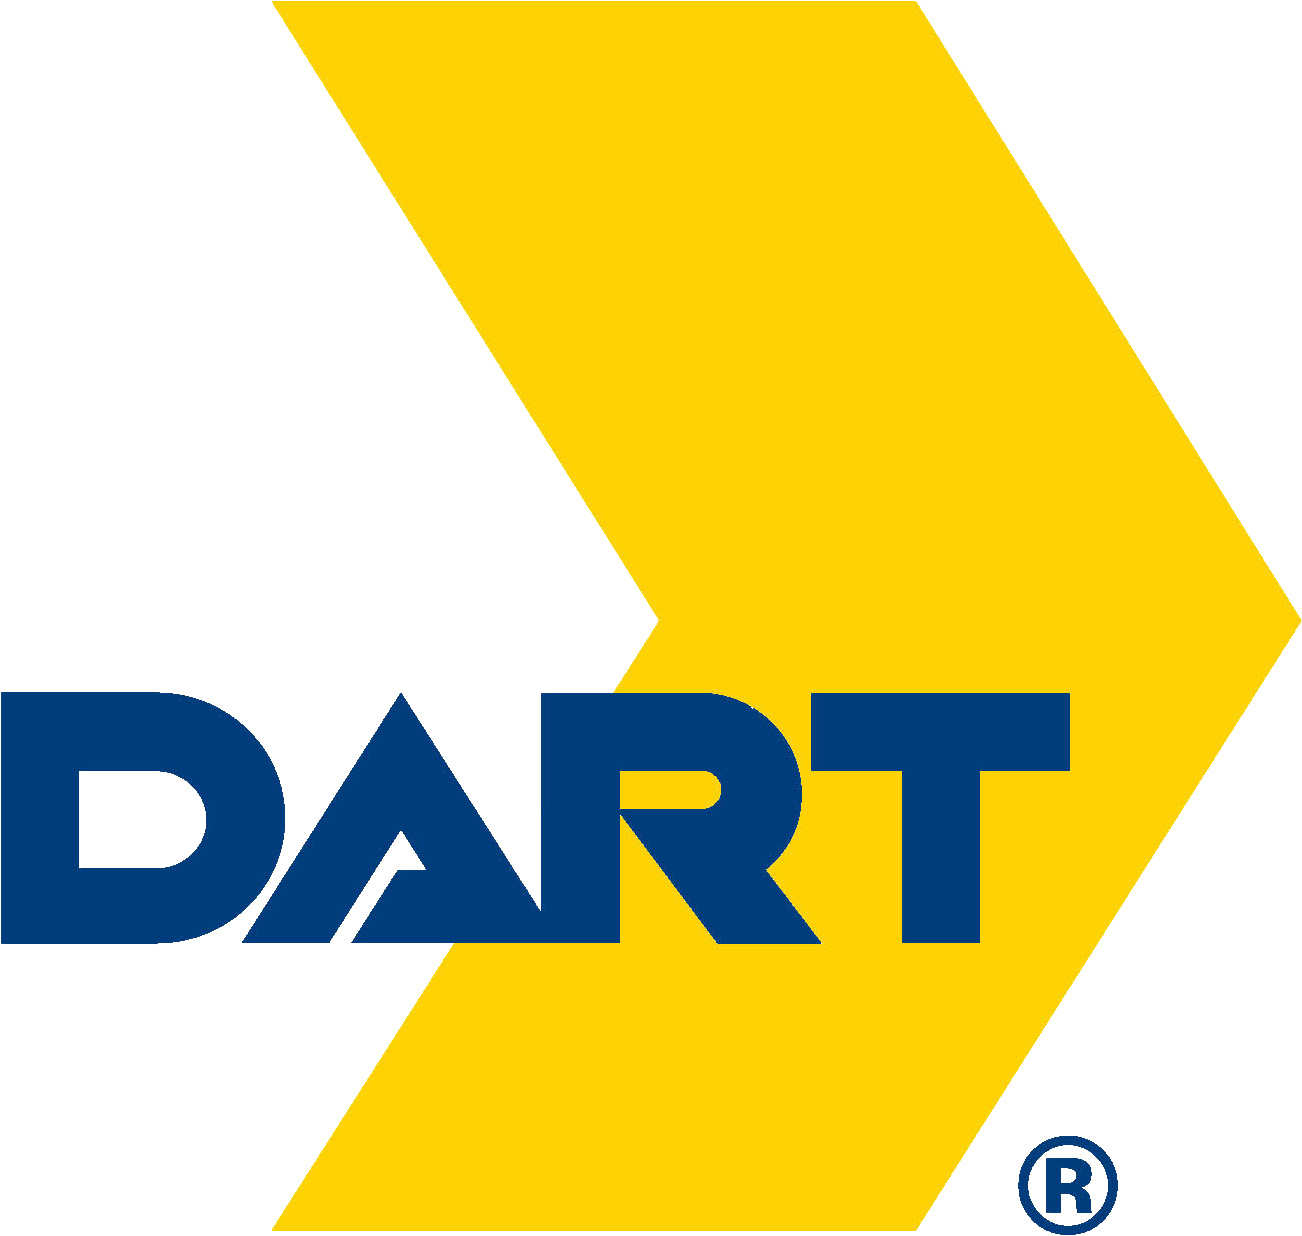 nasa dart logo